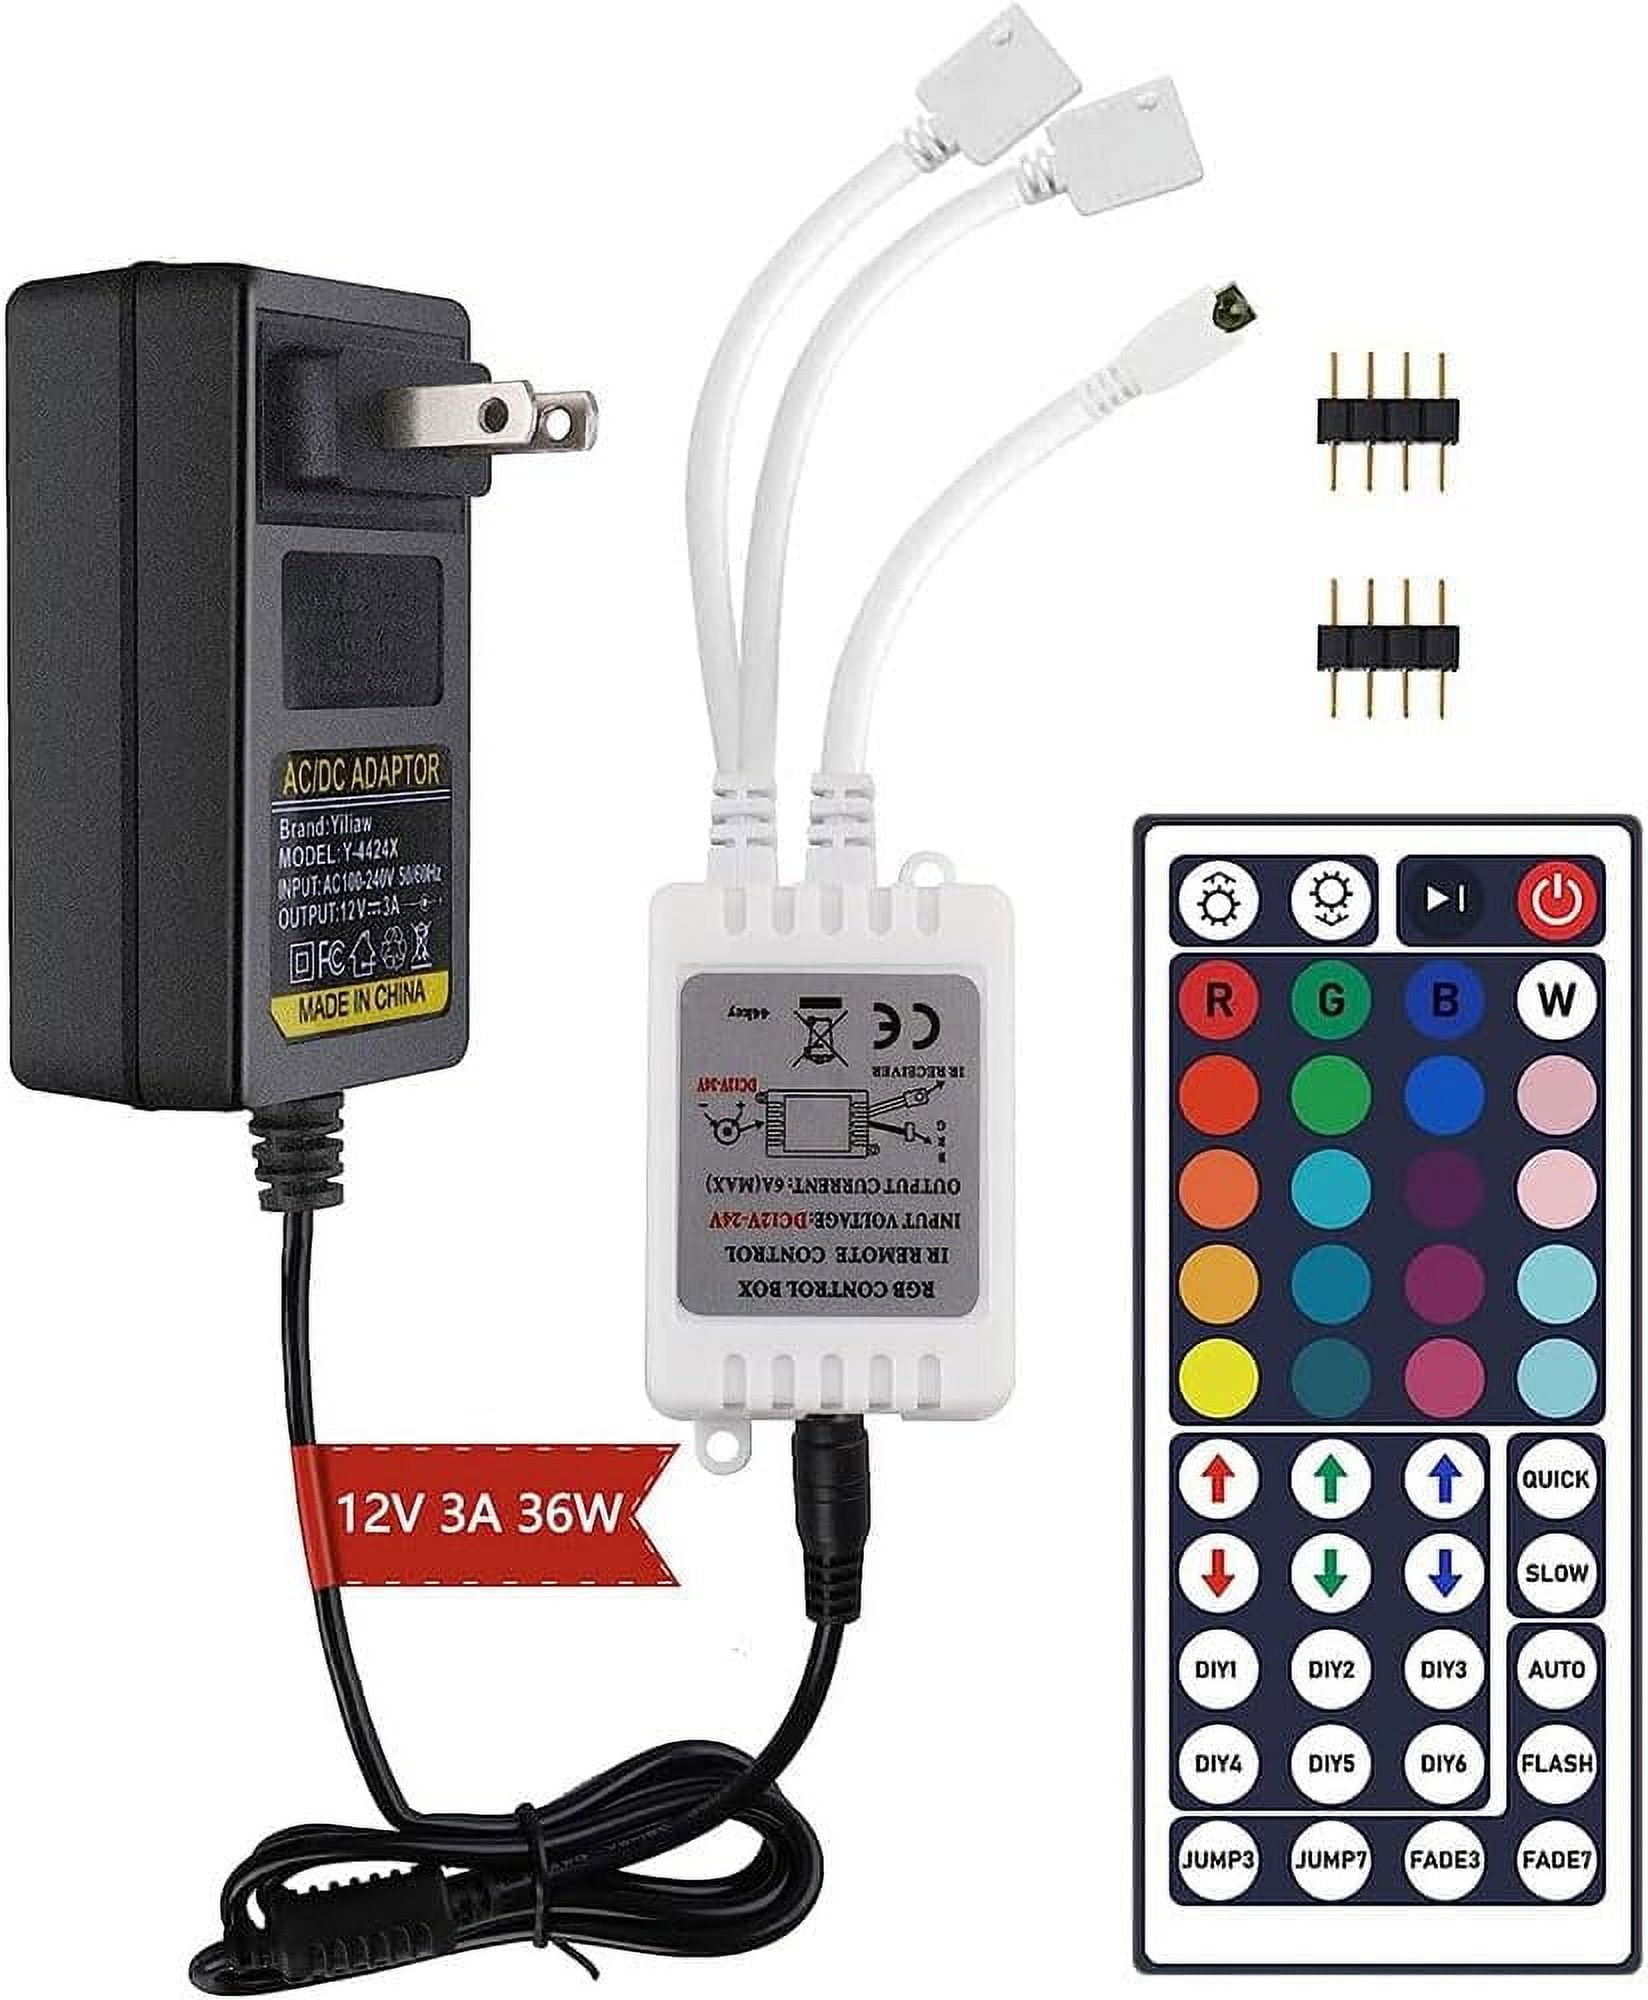 Hwylizg 2-Port 44 Key IR LED Light Remote,RGB Control Box + DC 12V 3A